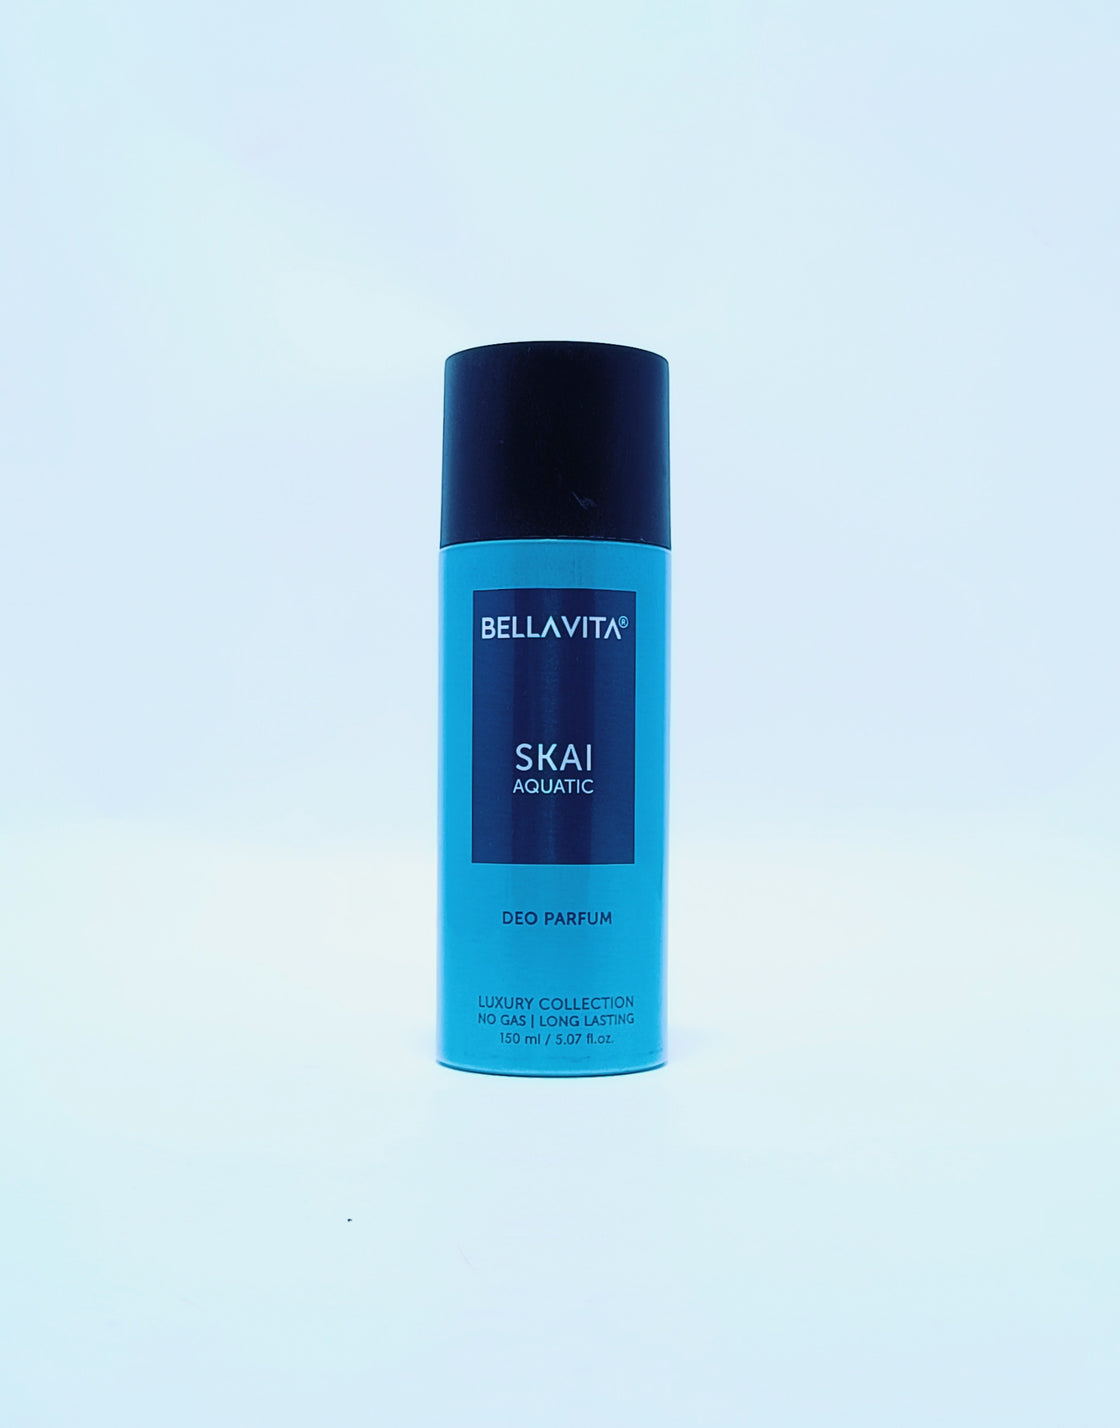 Bella Vita SKAI Aquatic Man Body Parfum No Gas Deodorant, 150ml